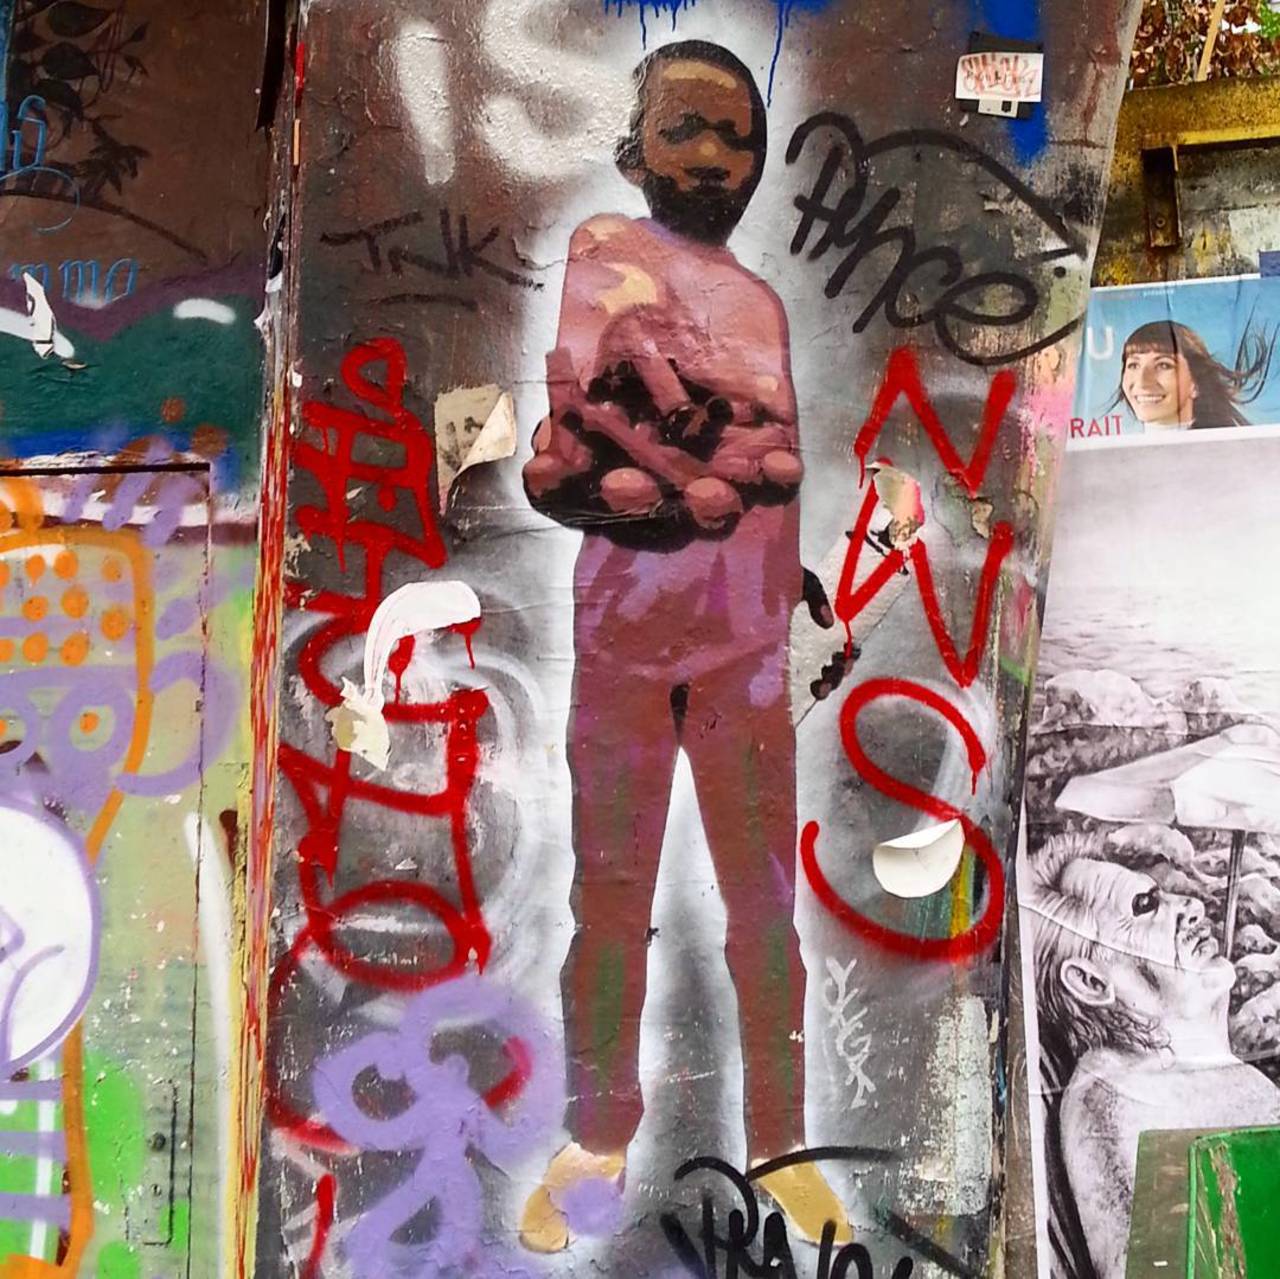 #Paris #graffiti photo by @fotoflaneuse http://ift.tt/1XsfRUS #StreetArt https://t.co/I5Bwr5Xm41